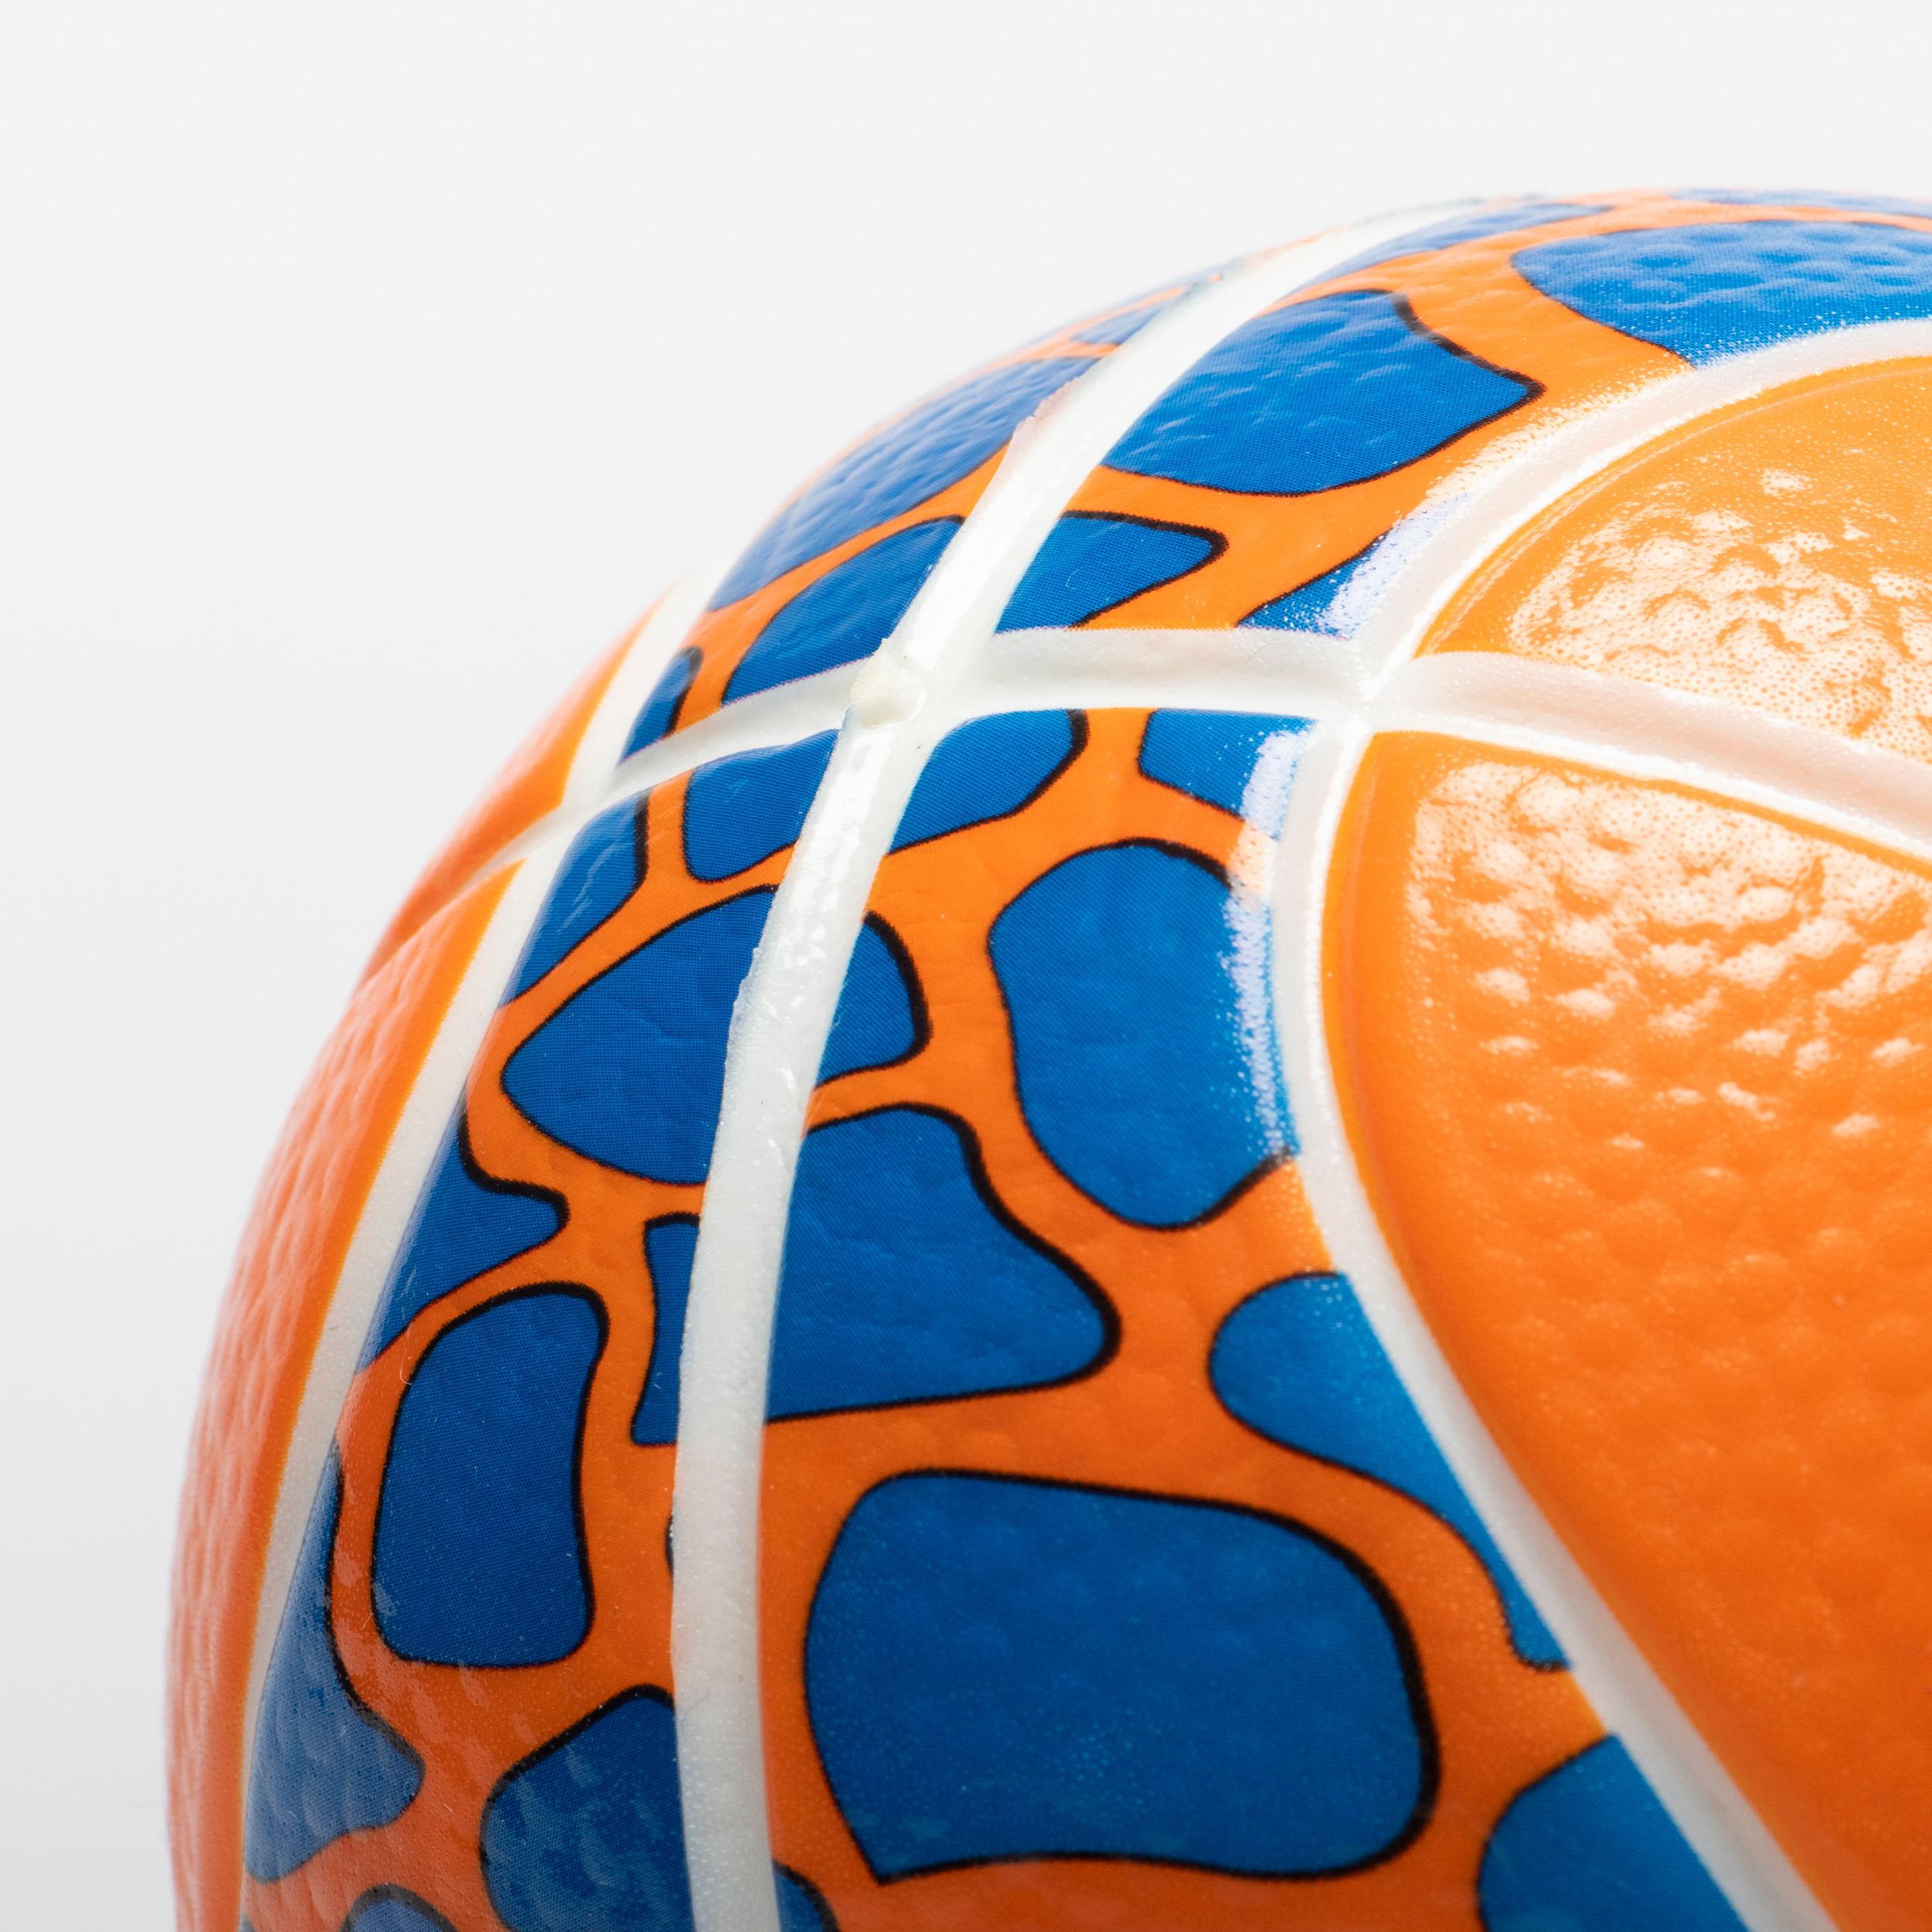 Mini ballon de basketball en mousse taille 1 Enfant - K100 orange